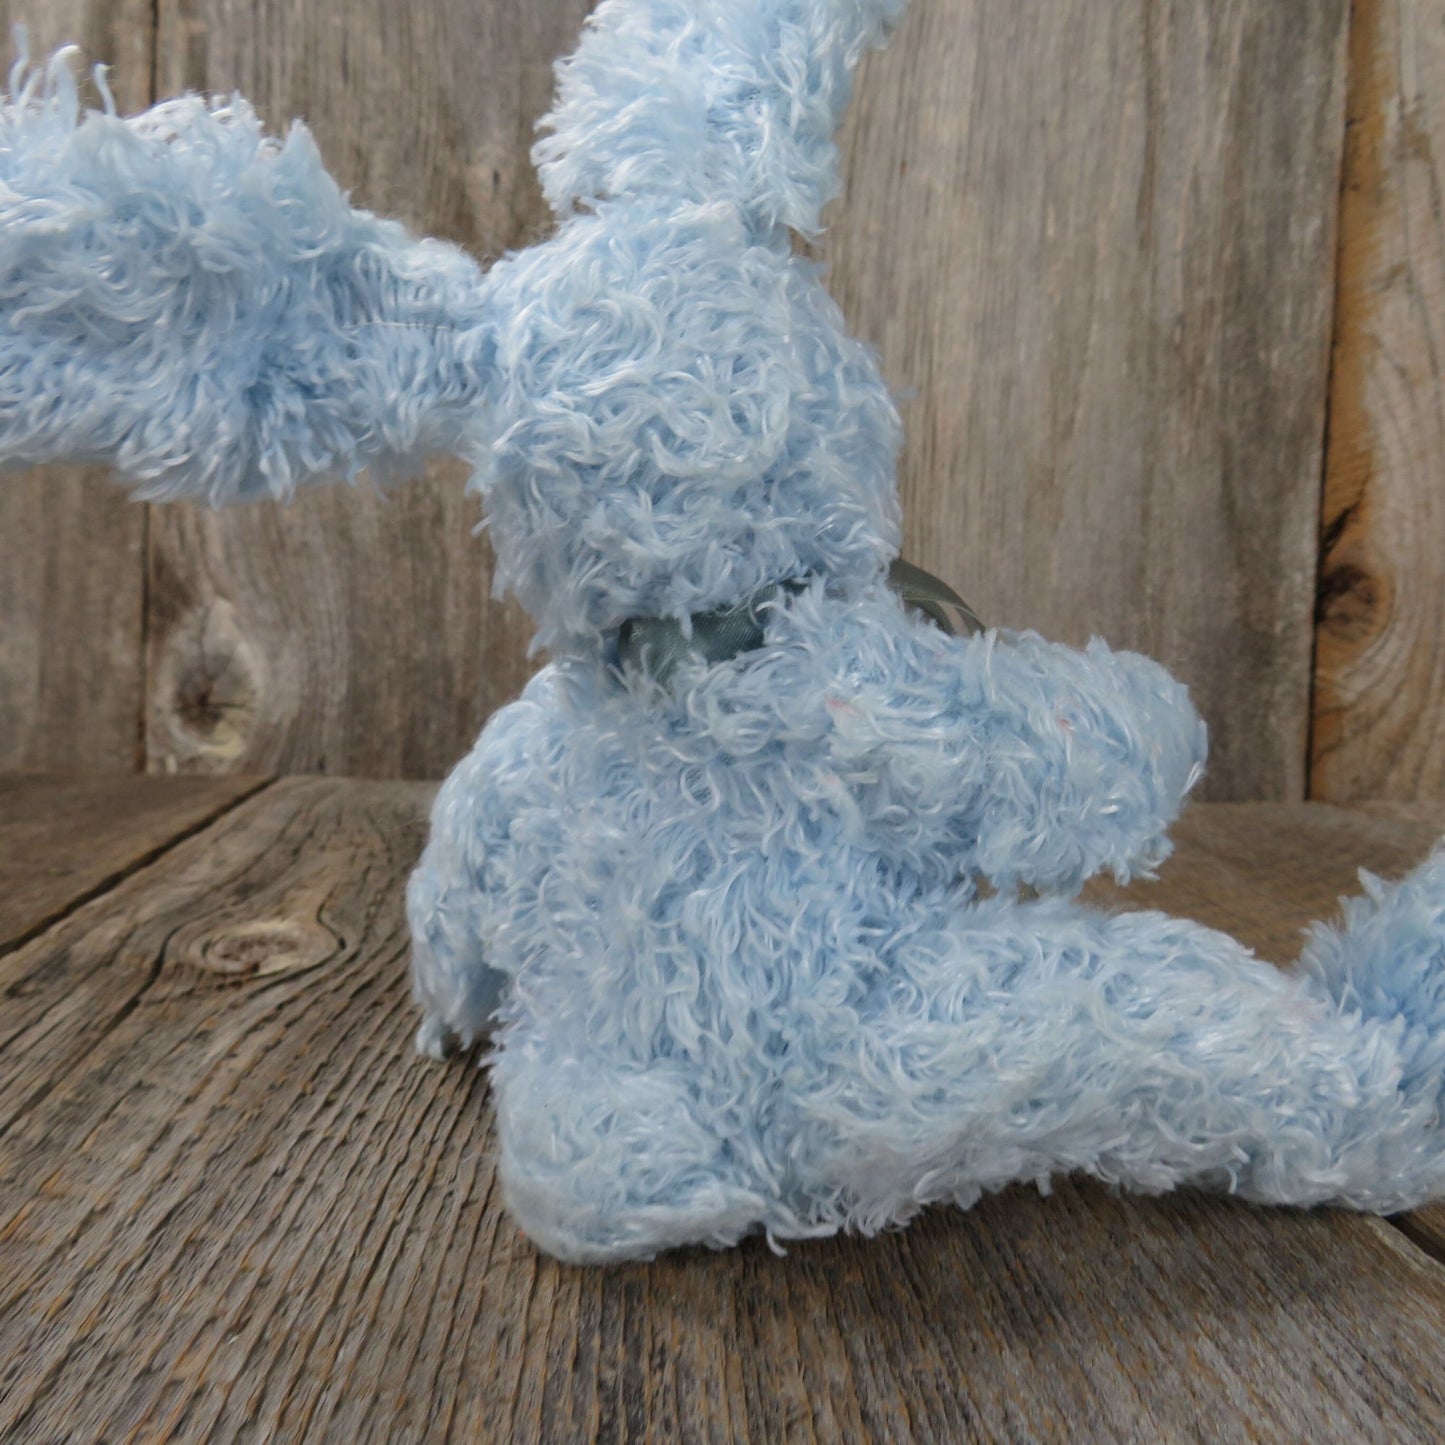 Blue Fuzzy Bunny Plush Ty Attic Treasures Rabbit 2000 Gingham Beanie Baby Stuffed Animal